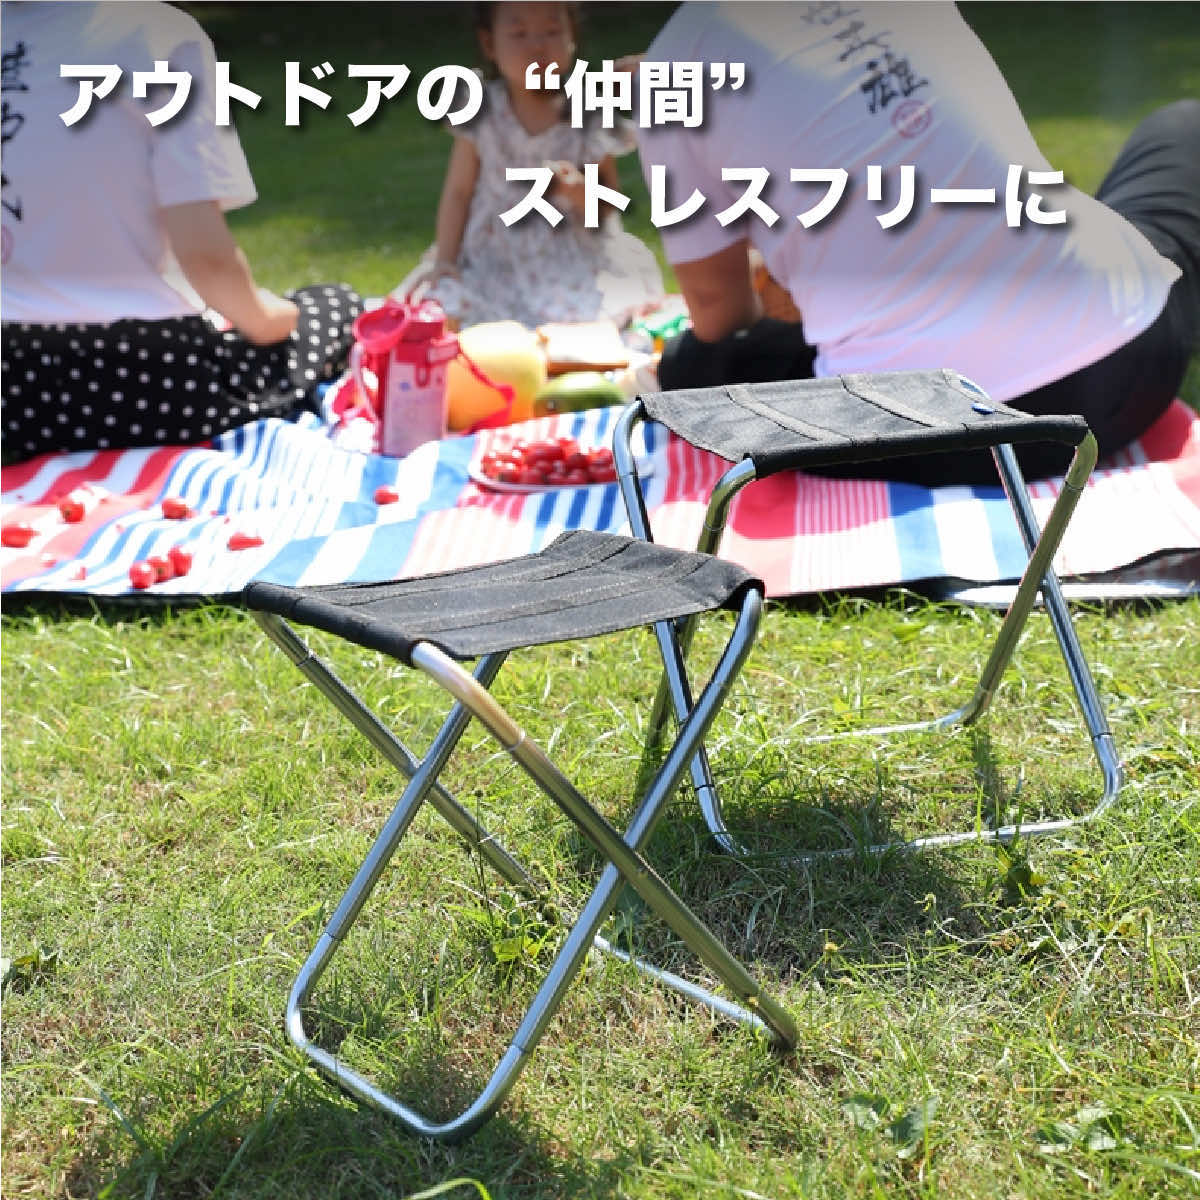 www.haoming.jp - アウトドアチェア 折り畳みイス キャンプ 運動会